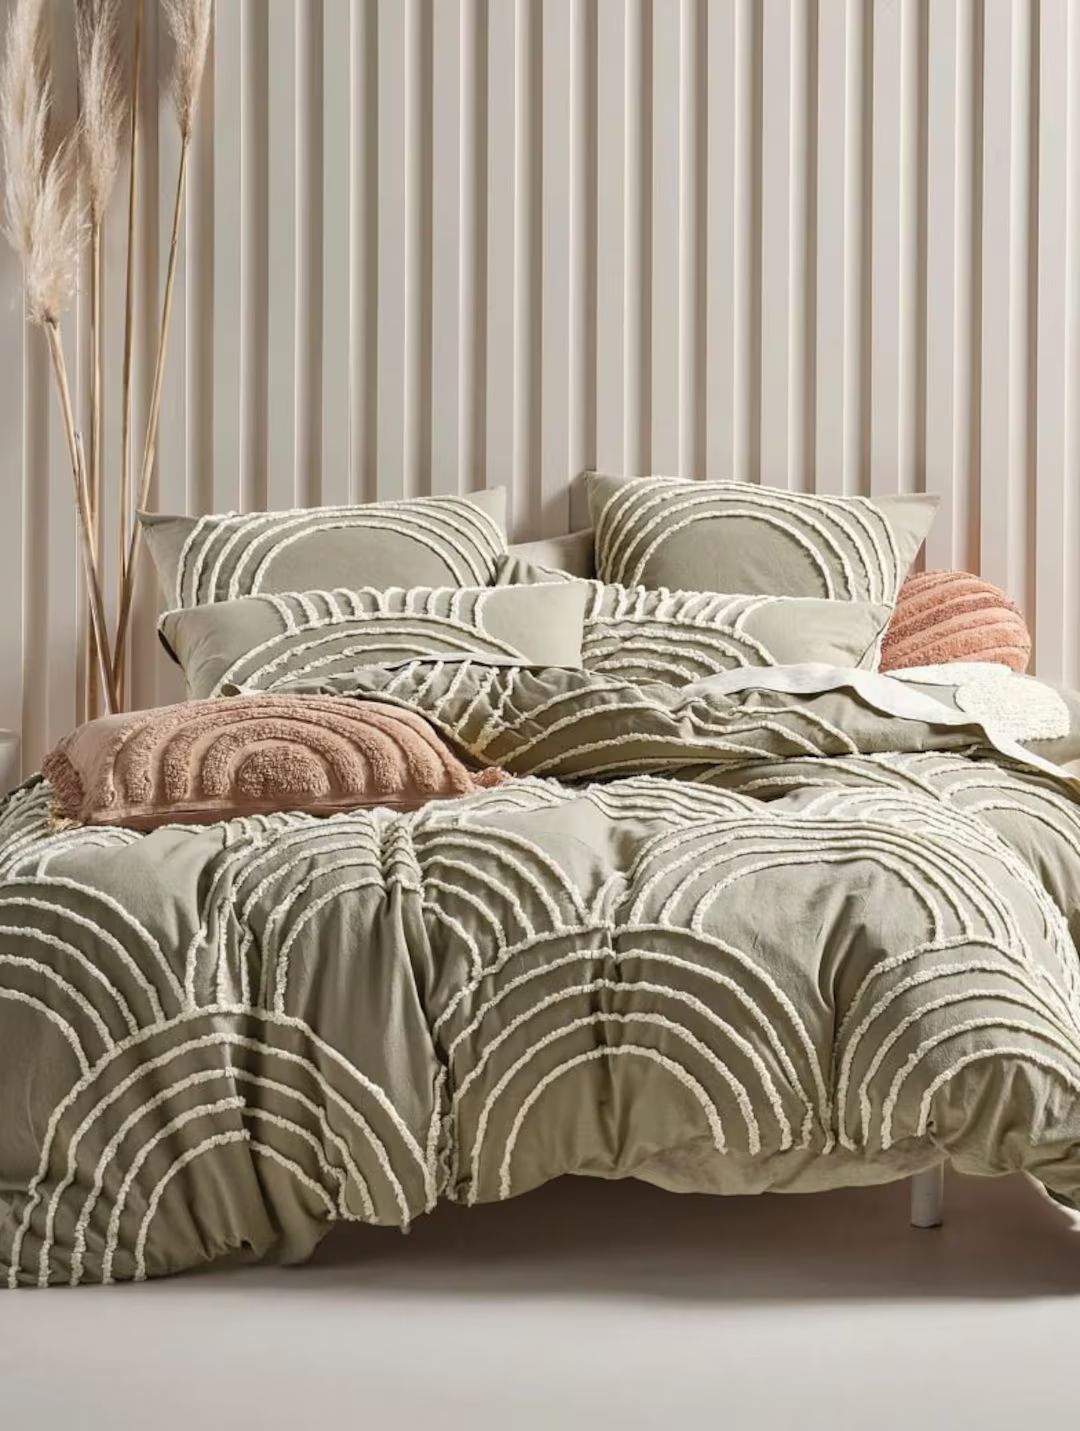 5 Pcs Sage Green Tufted Cotton Duvet Cover set, Luxury Boho Bedding, Down comforter Cover, Pillow... | Etsy (CAD)